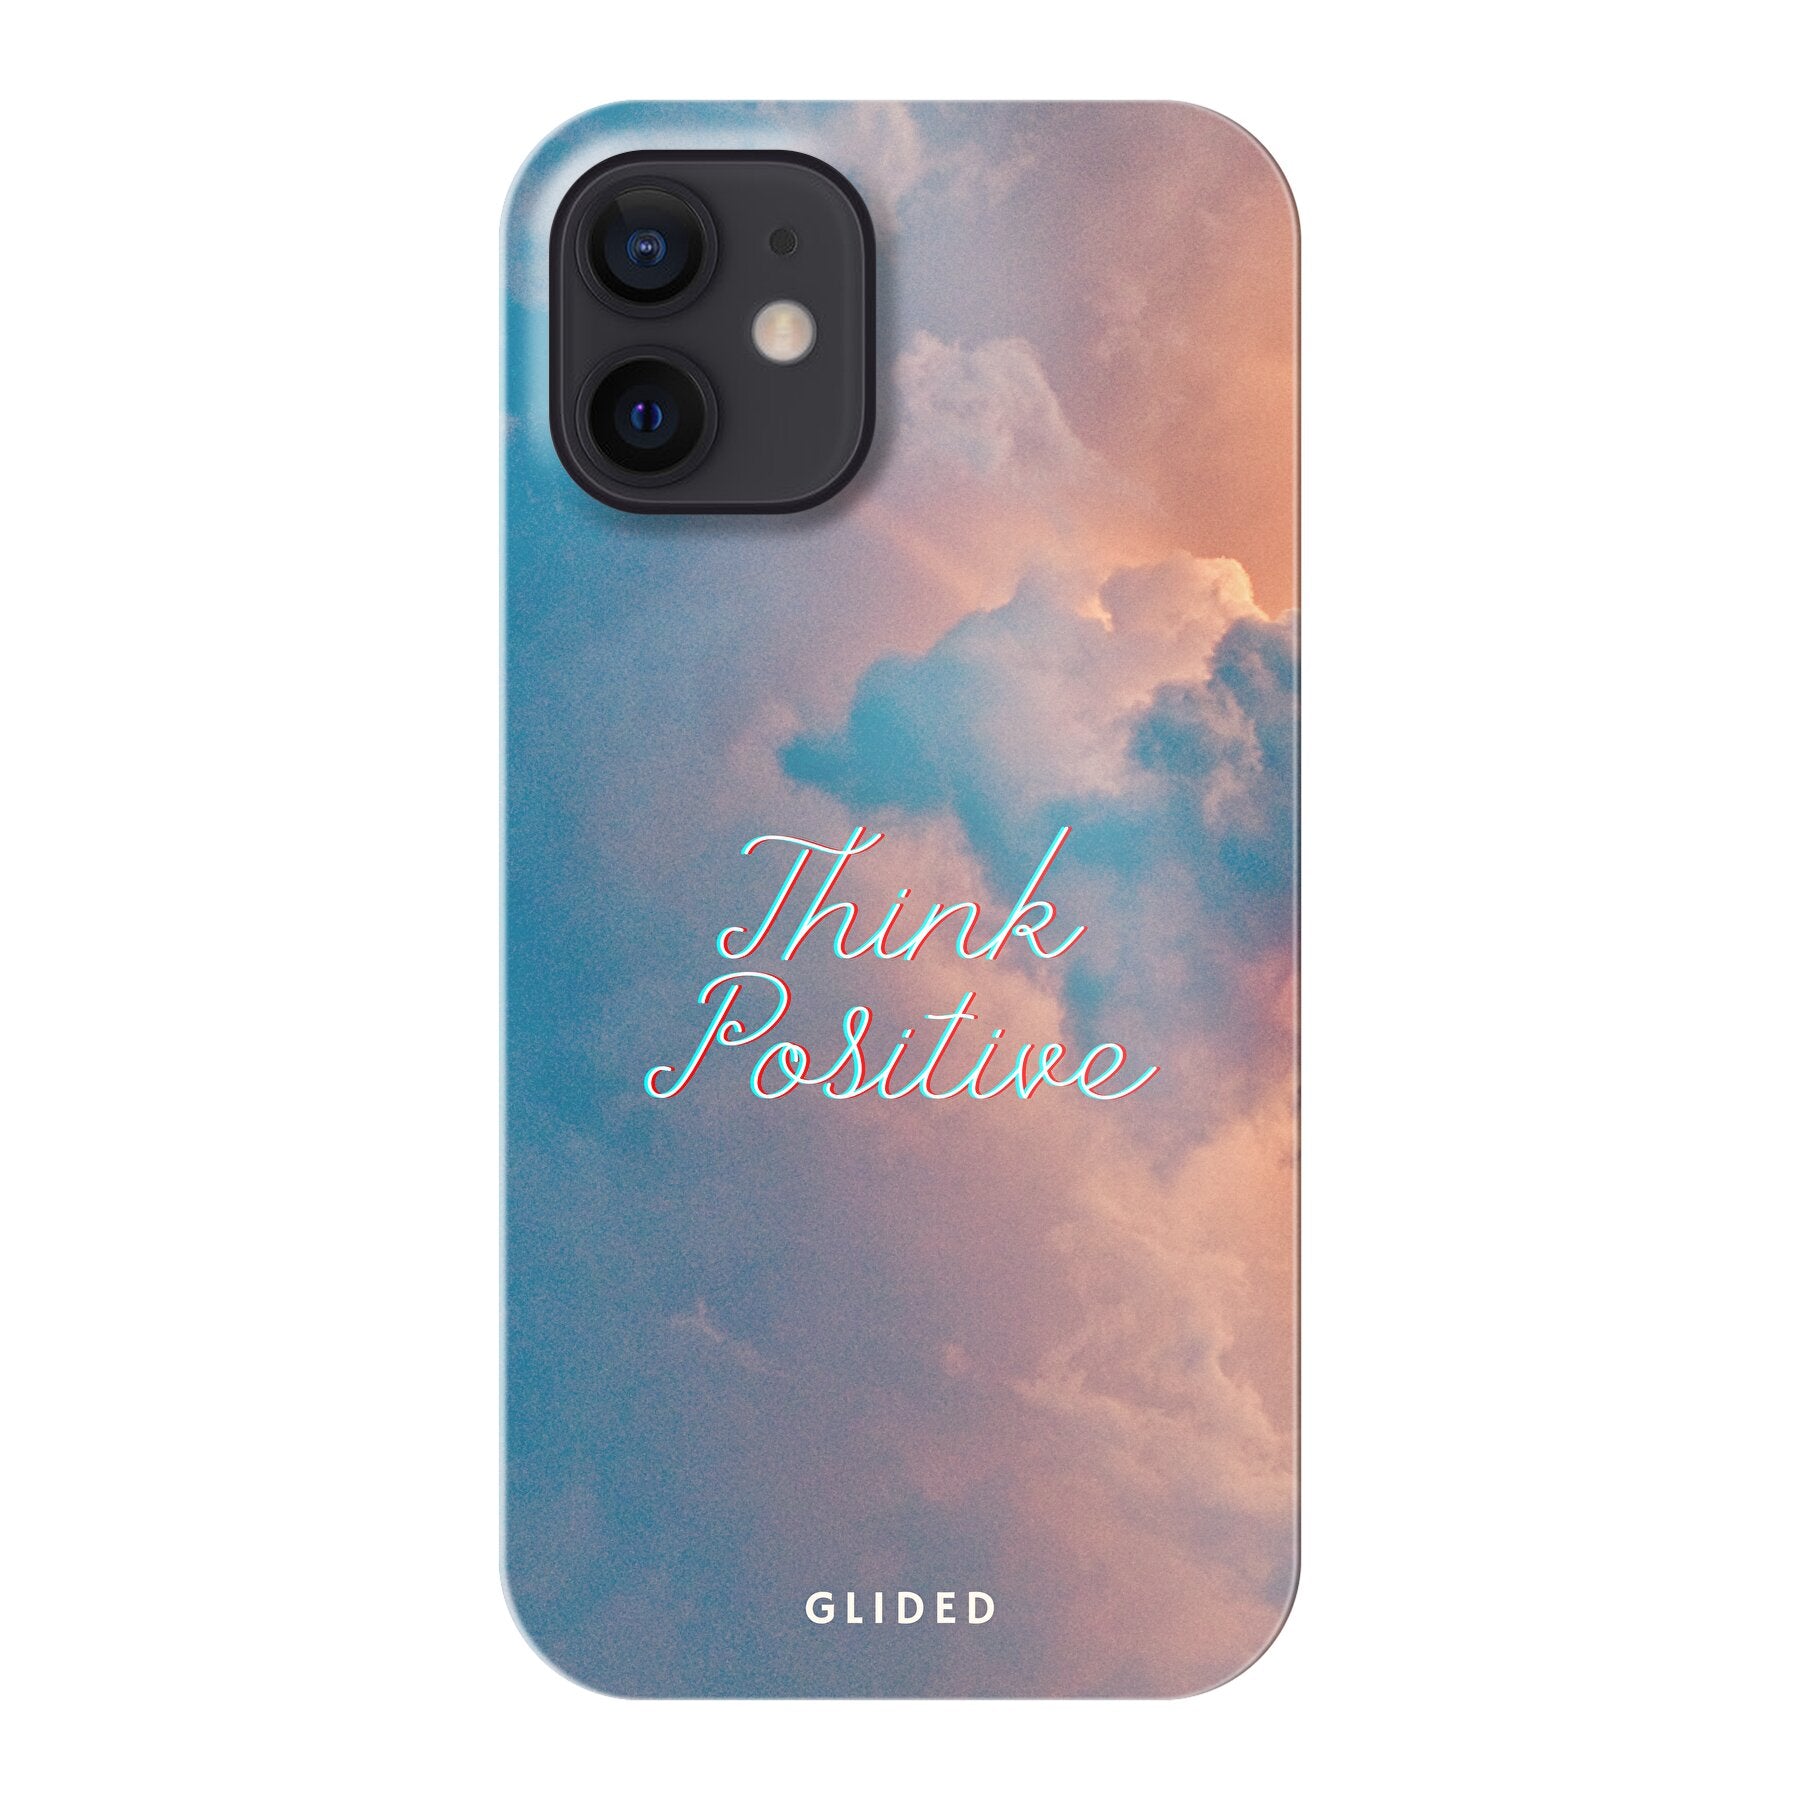 Think positive - iPhone 12 mini Handyhülle Hard Case